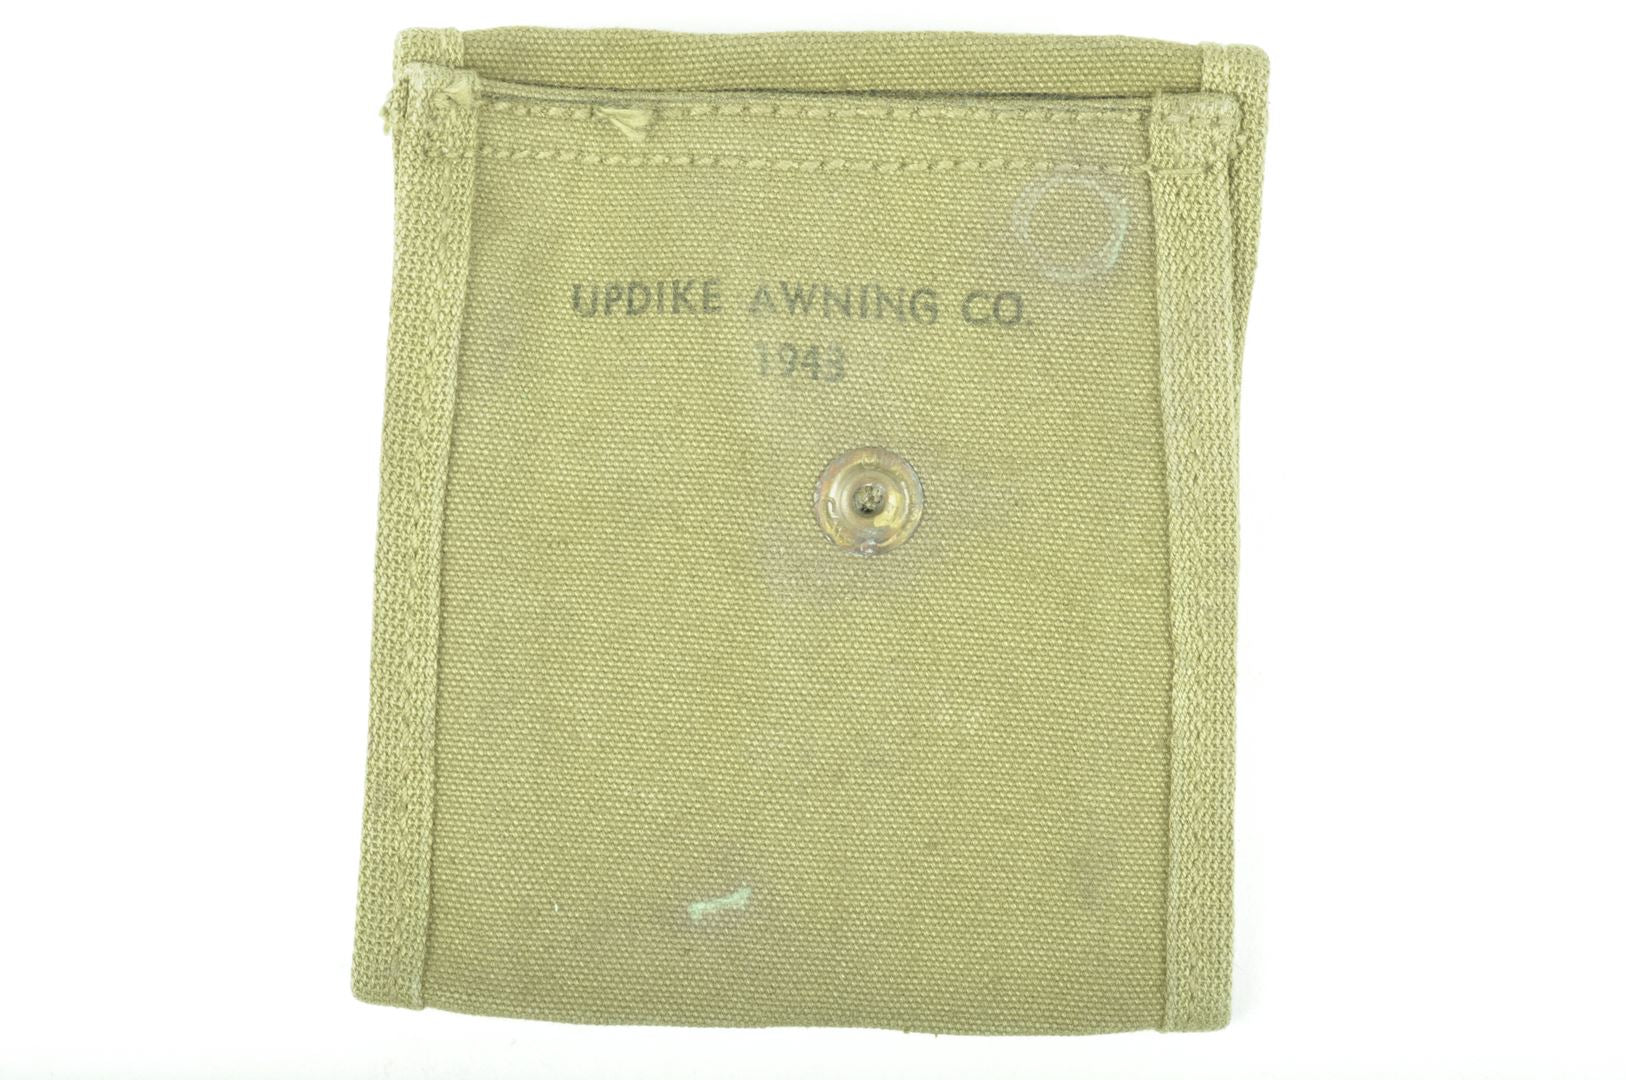 Porte chargeurs USM1 / UPDIKE AWNING CO. 1943